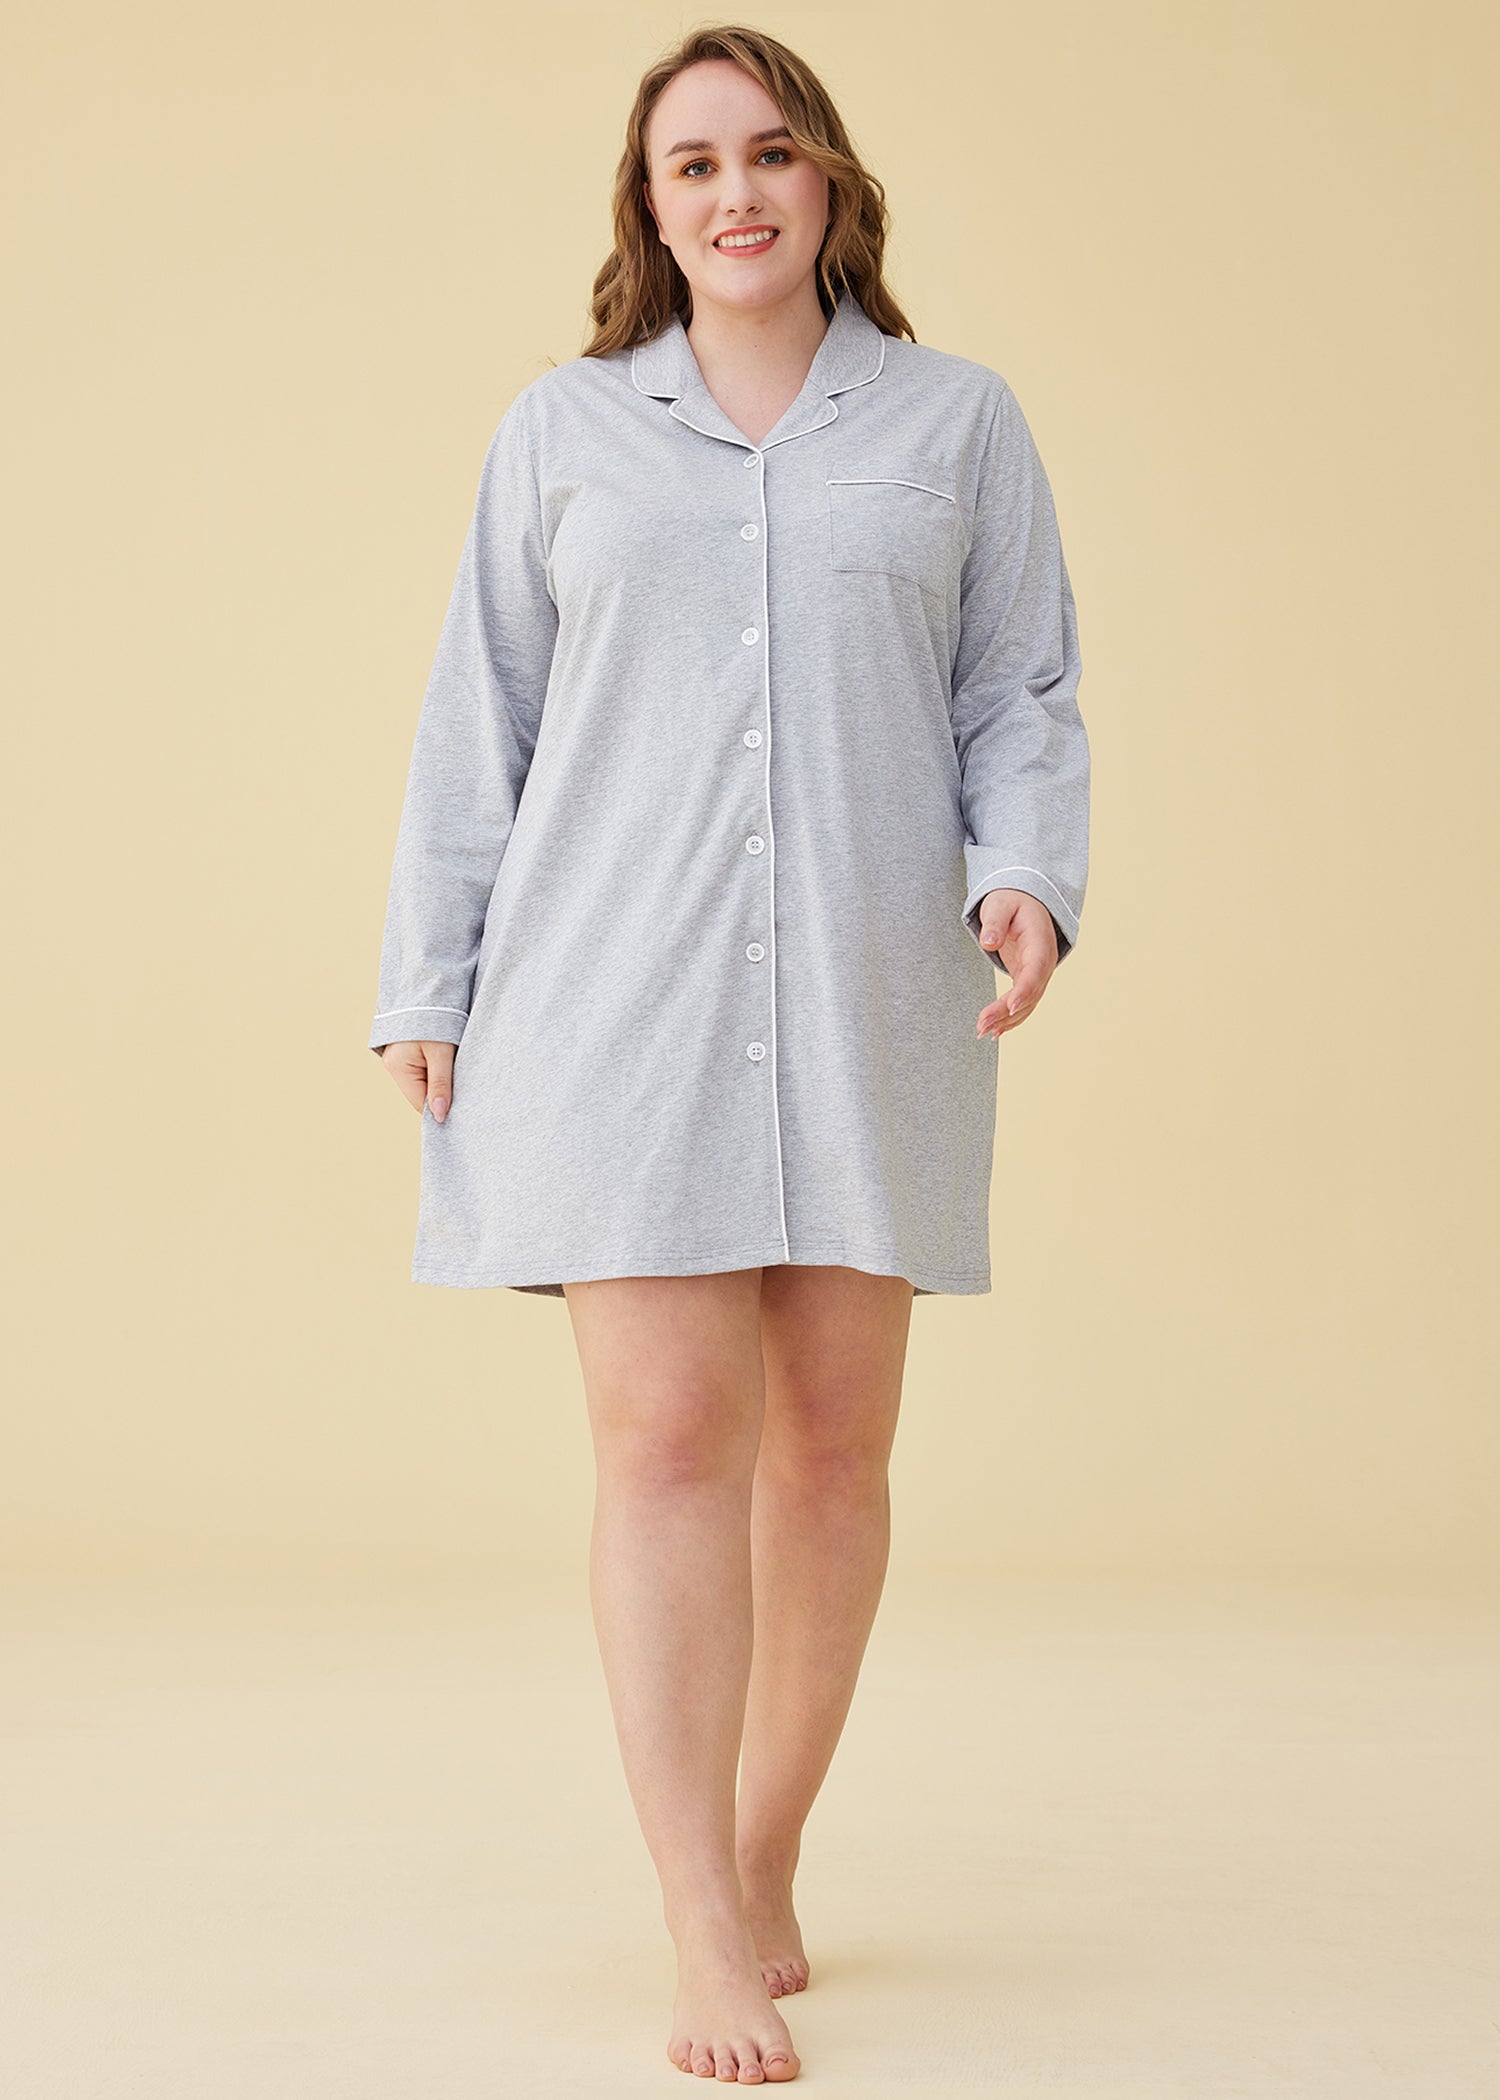 Women's Cotton Nightshirt Button Up Long Sleeves Sleep Shirt, Button Up  Sleep Shirts